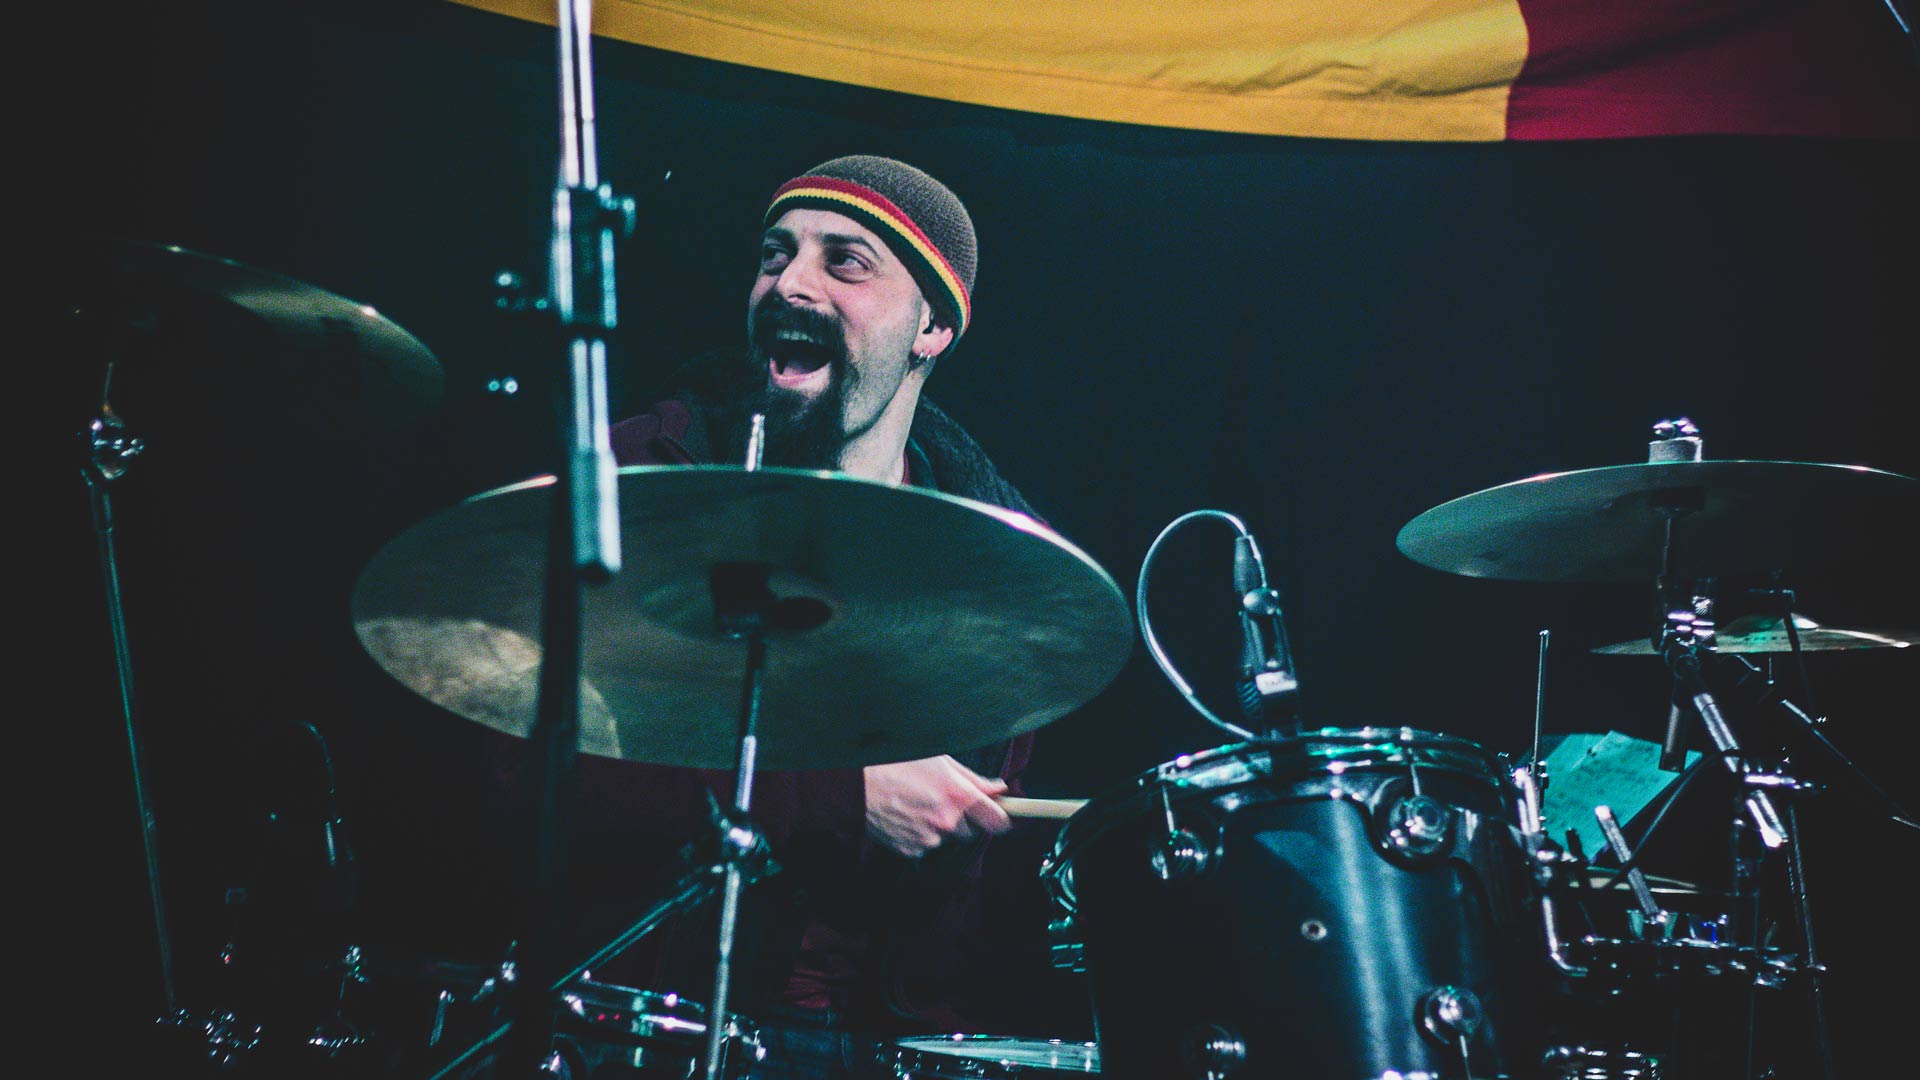 Markos-Vassiliou-Session-Drummer-Touring-Musician-Picture-Color